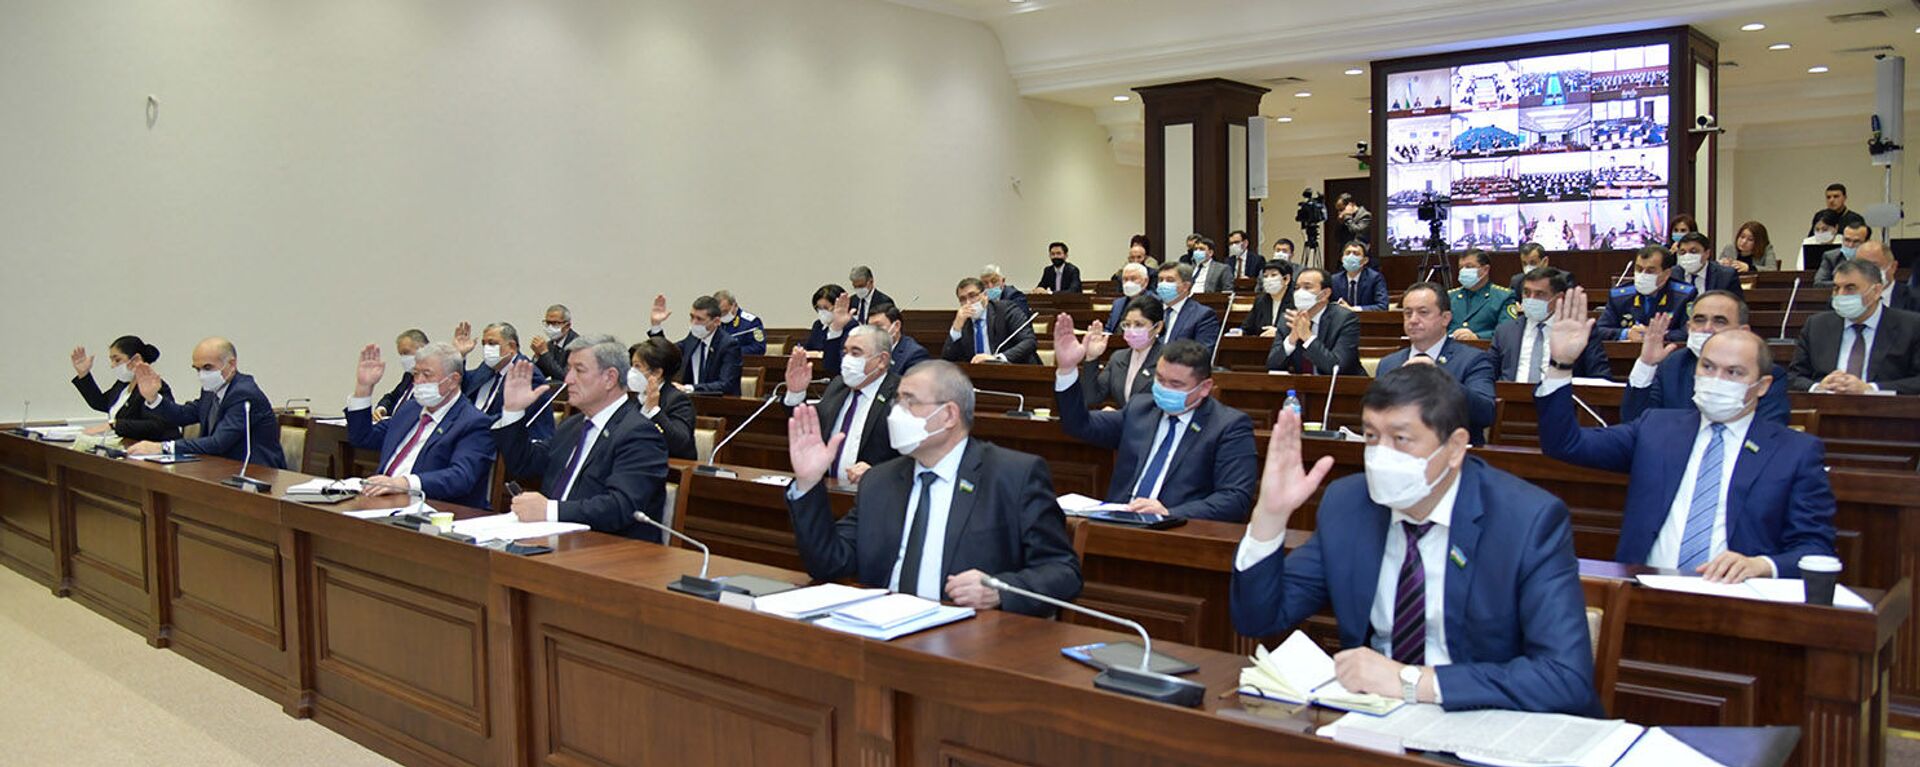 Собрание Сената 6 января - Sputnik Узбекистан, 1920, 06.01.2021